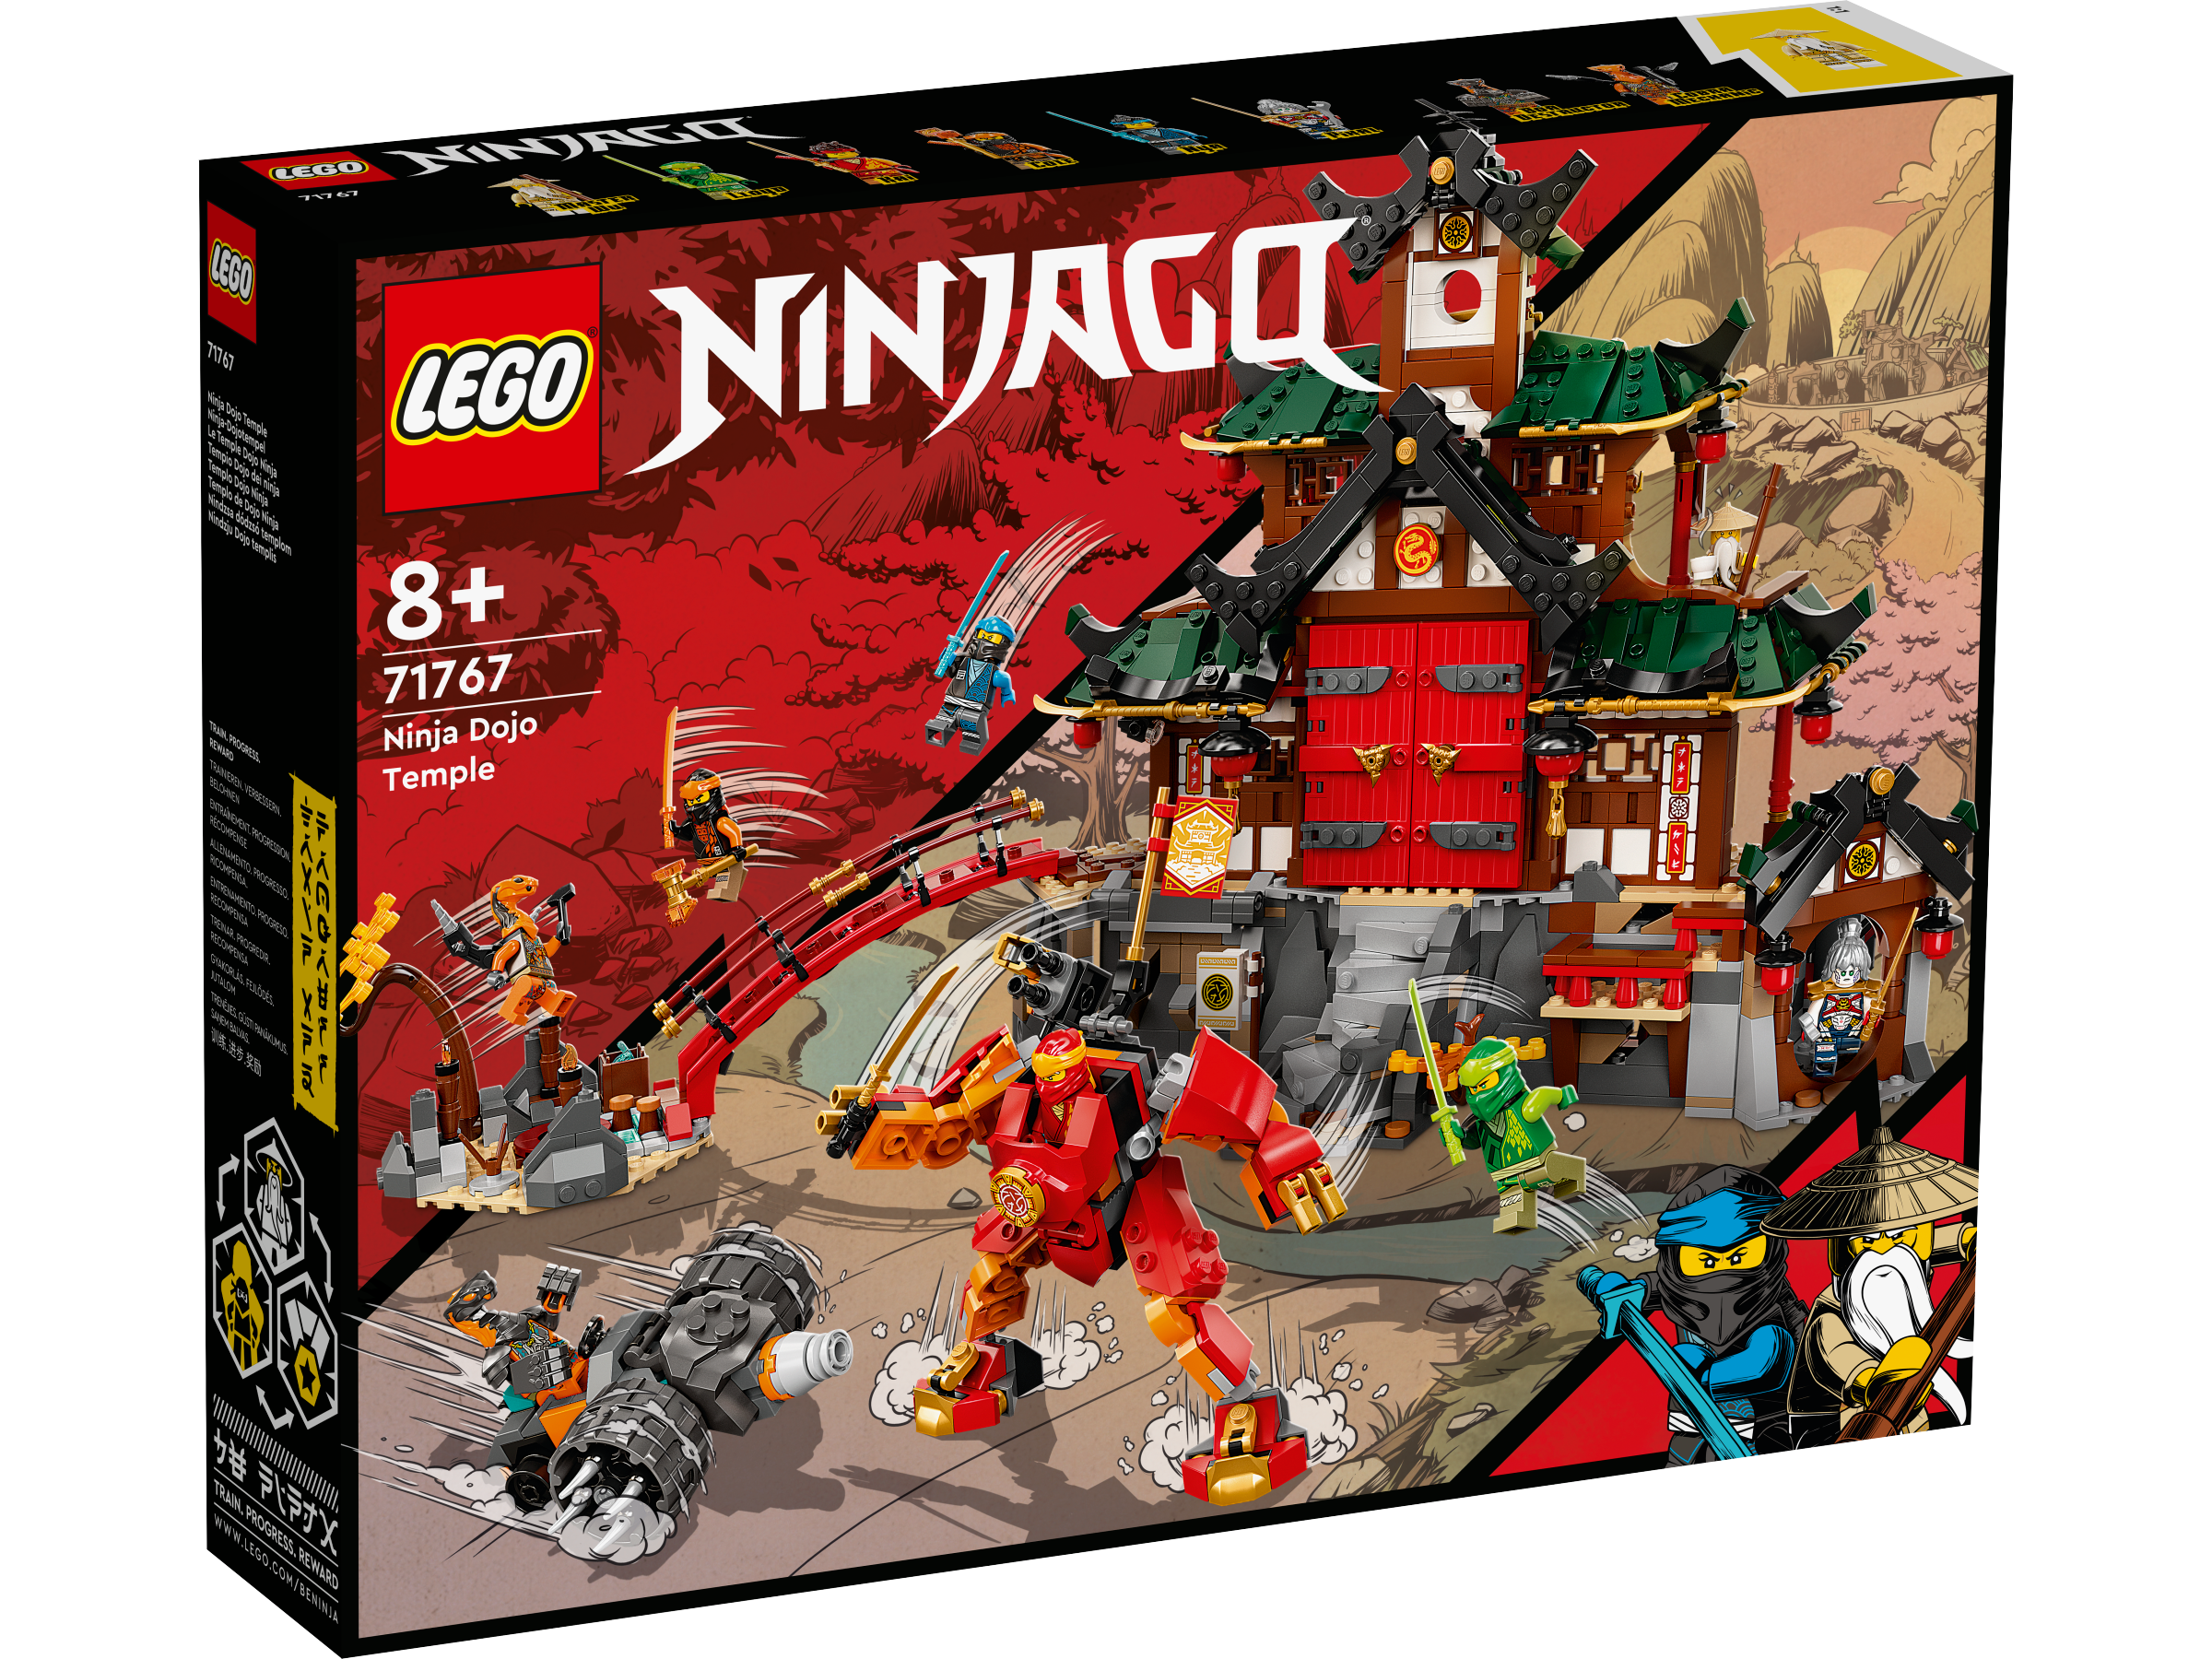 Lego 71767 Ninjago Big Modular